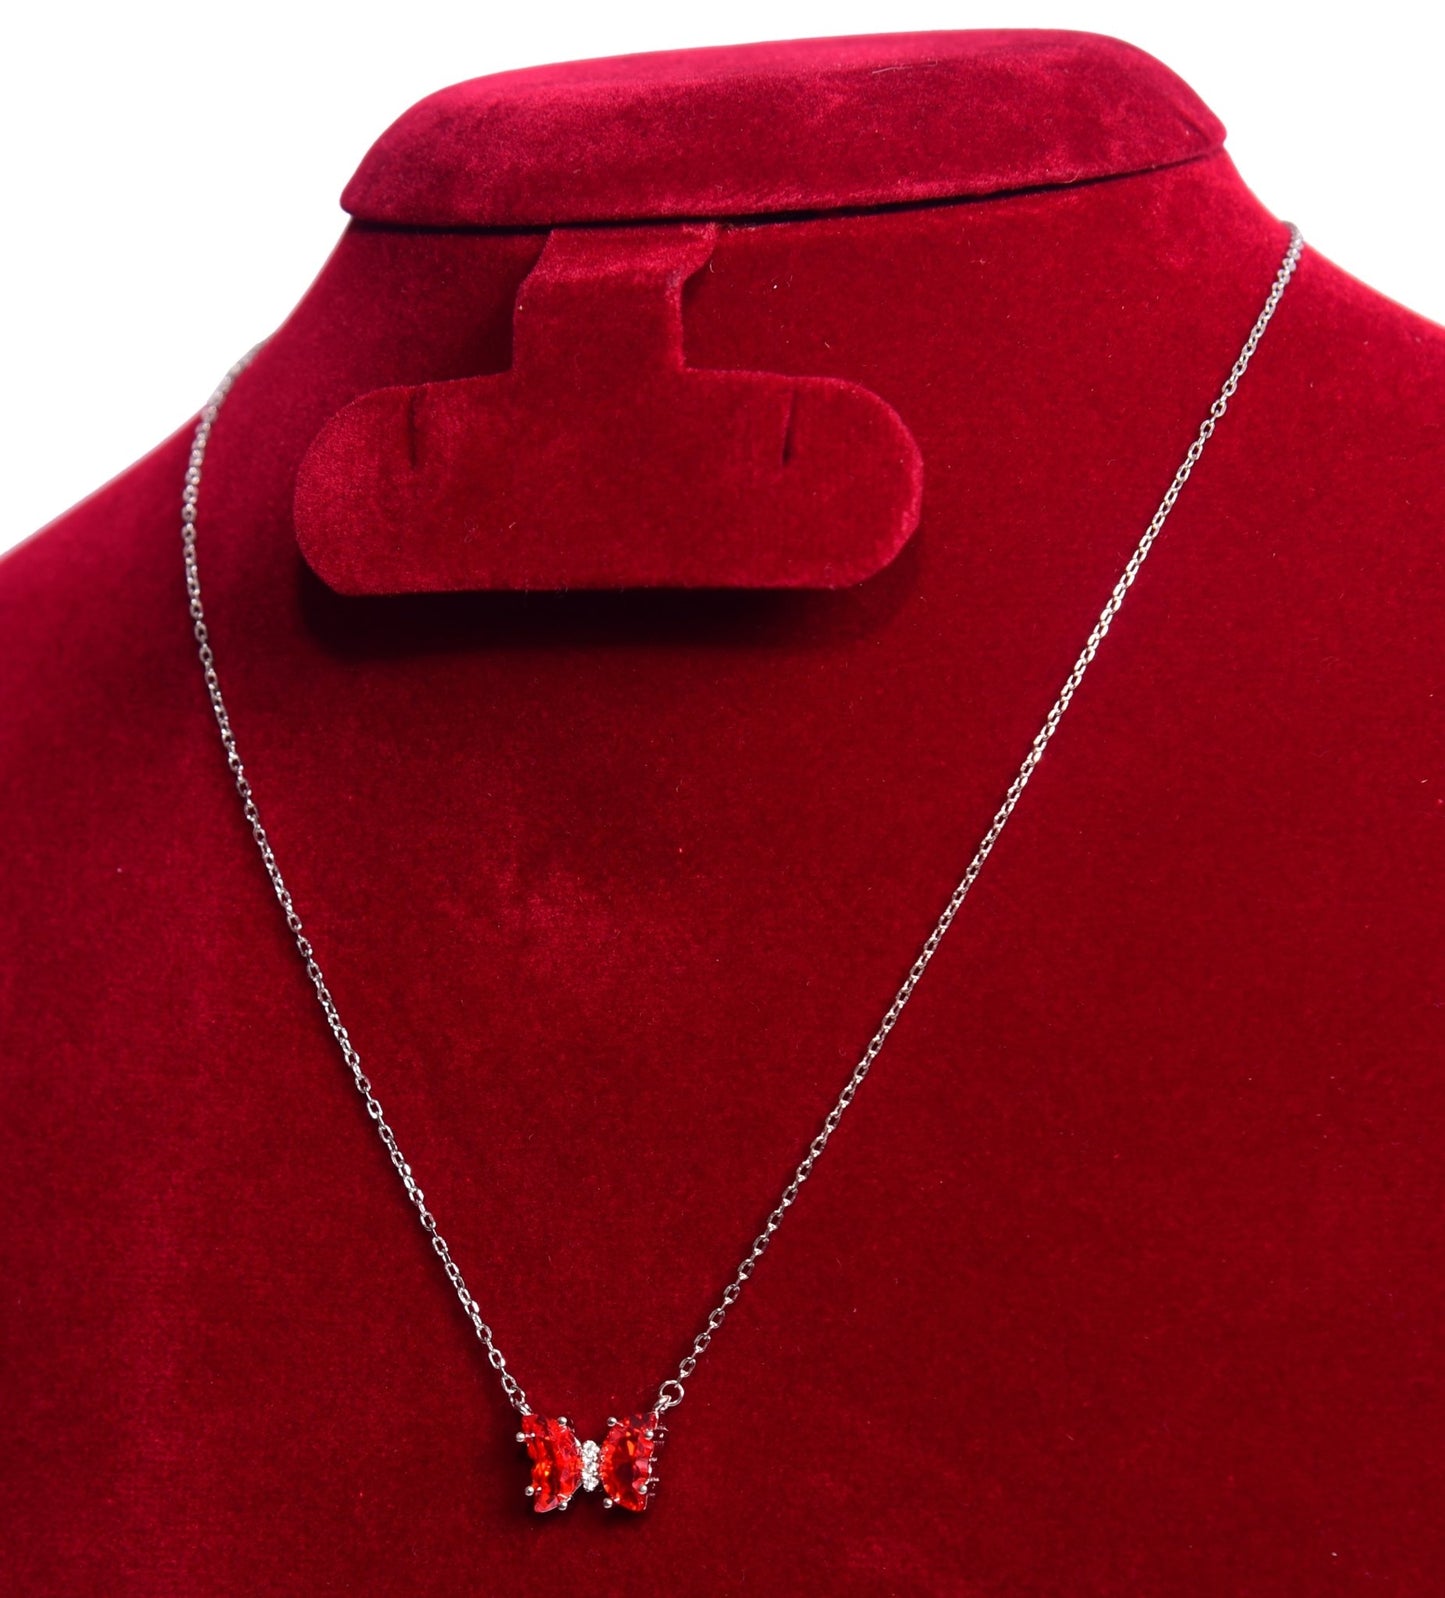 Scarlet Butterfly Pendant on Sterling Silver Chain | 925 Sterling Silver | Women's Chain - Indique